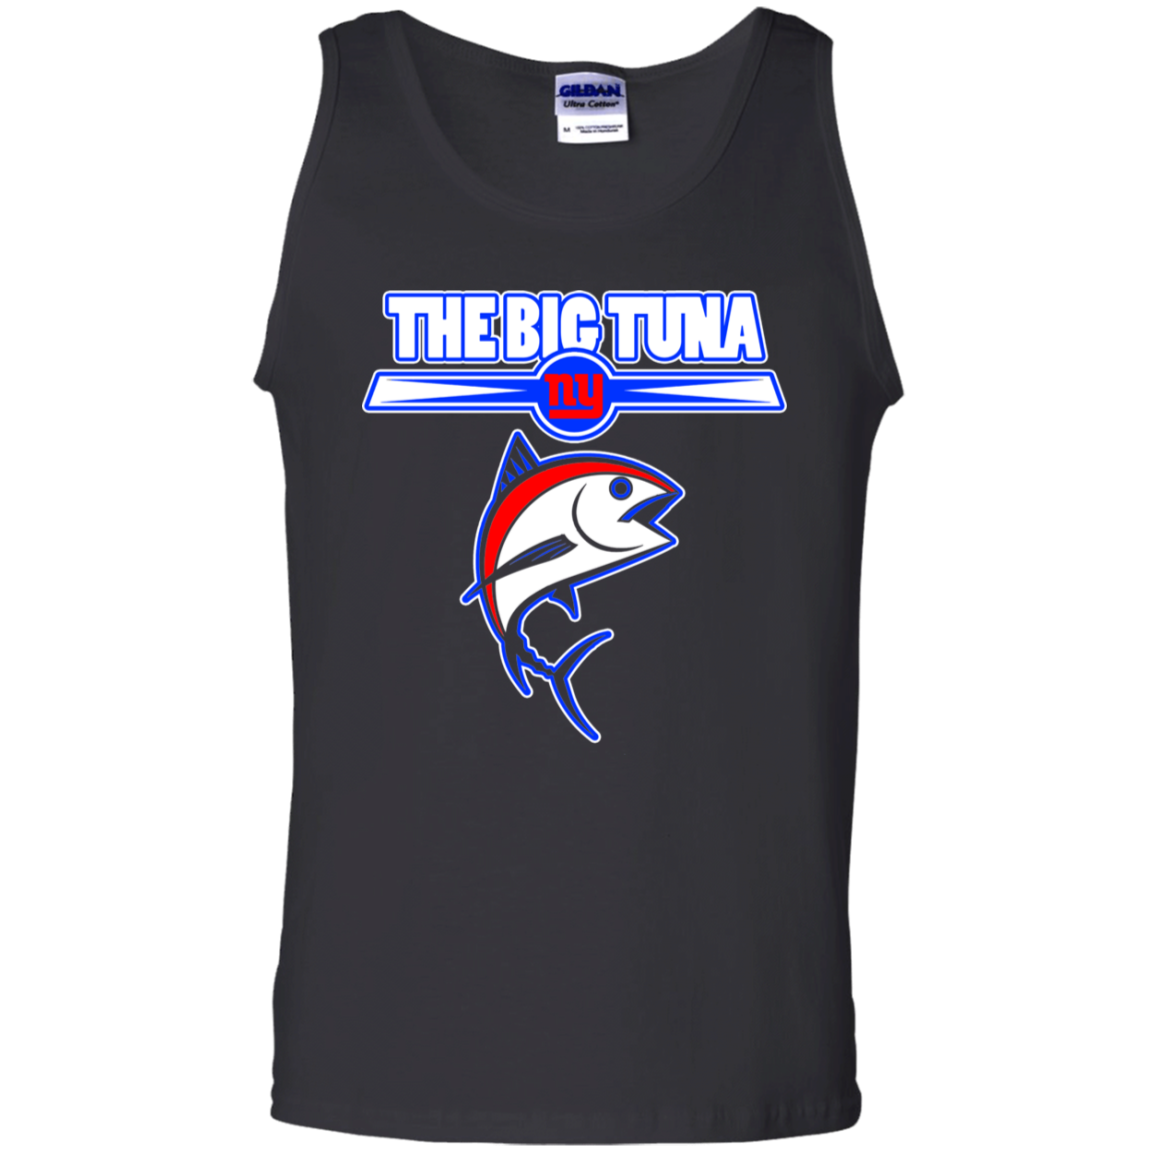 ArtichokeUSA Custom Design. The Big Tuna. Bill Parcell Tribute. NY Giants Fan Art. 100% Cotton Tank Top